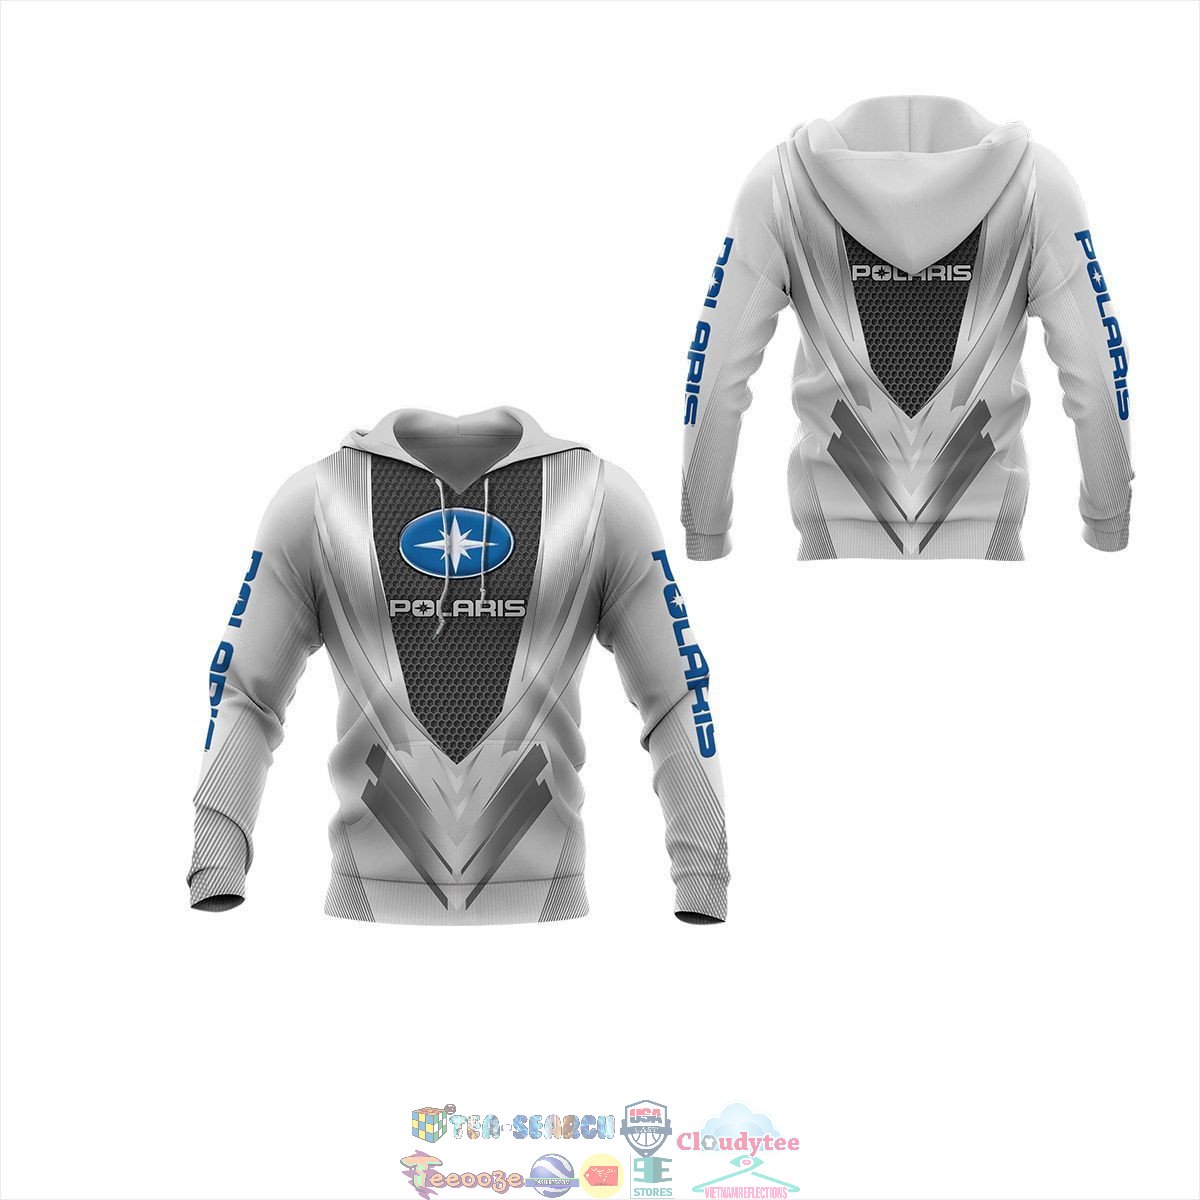 Polaris ver 9 3D hoodie and t-shirt